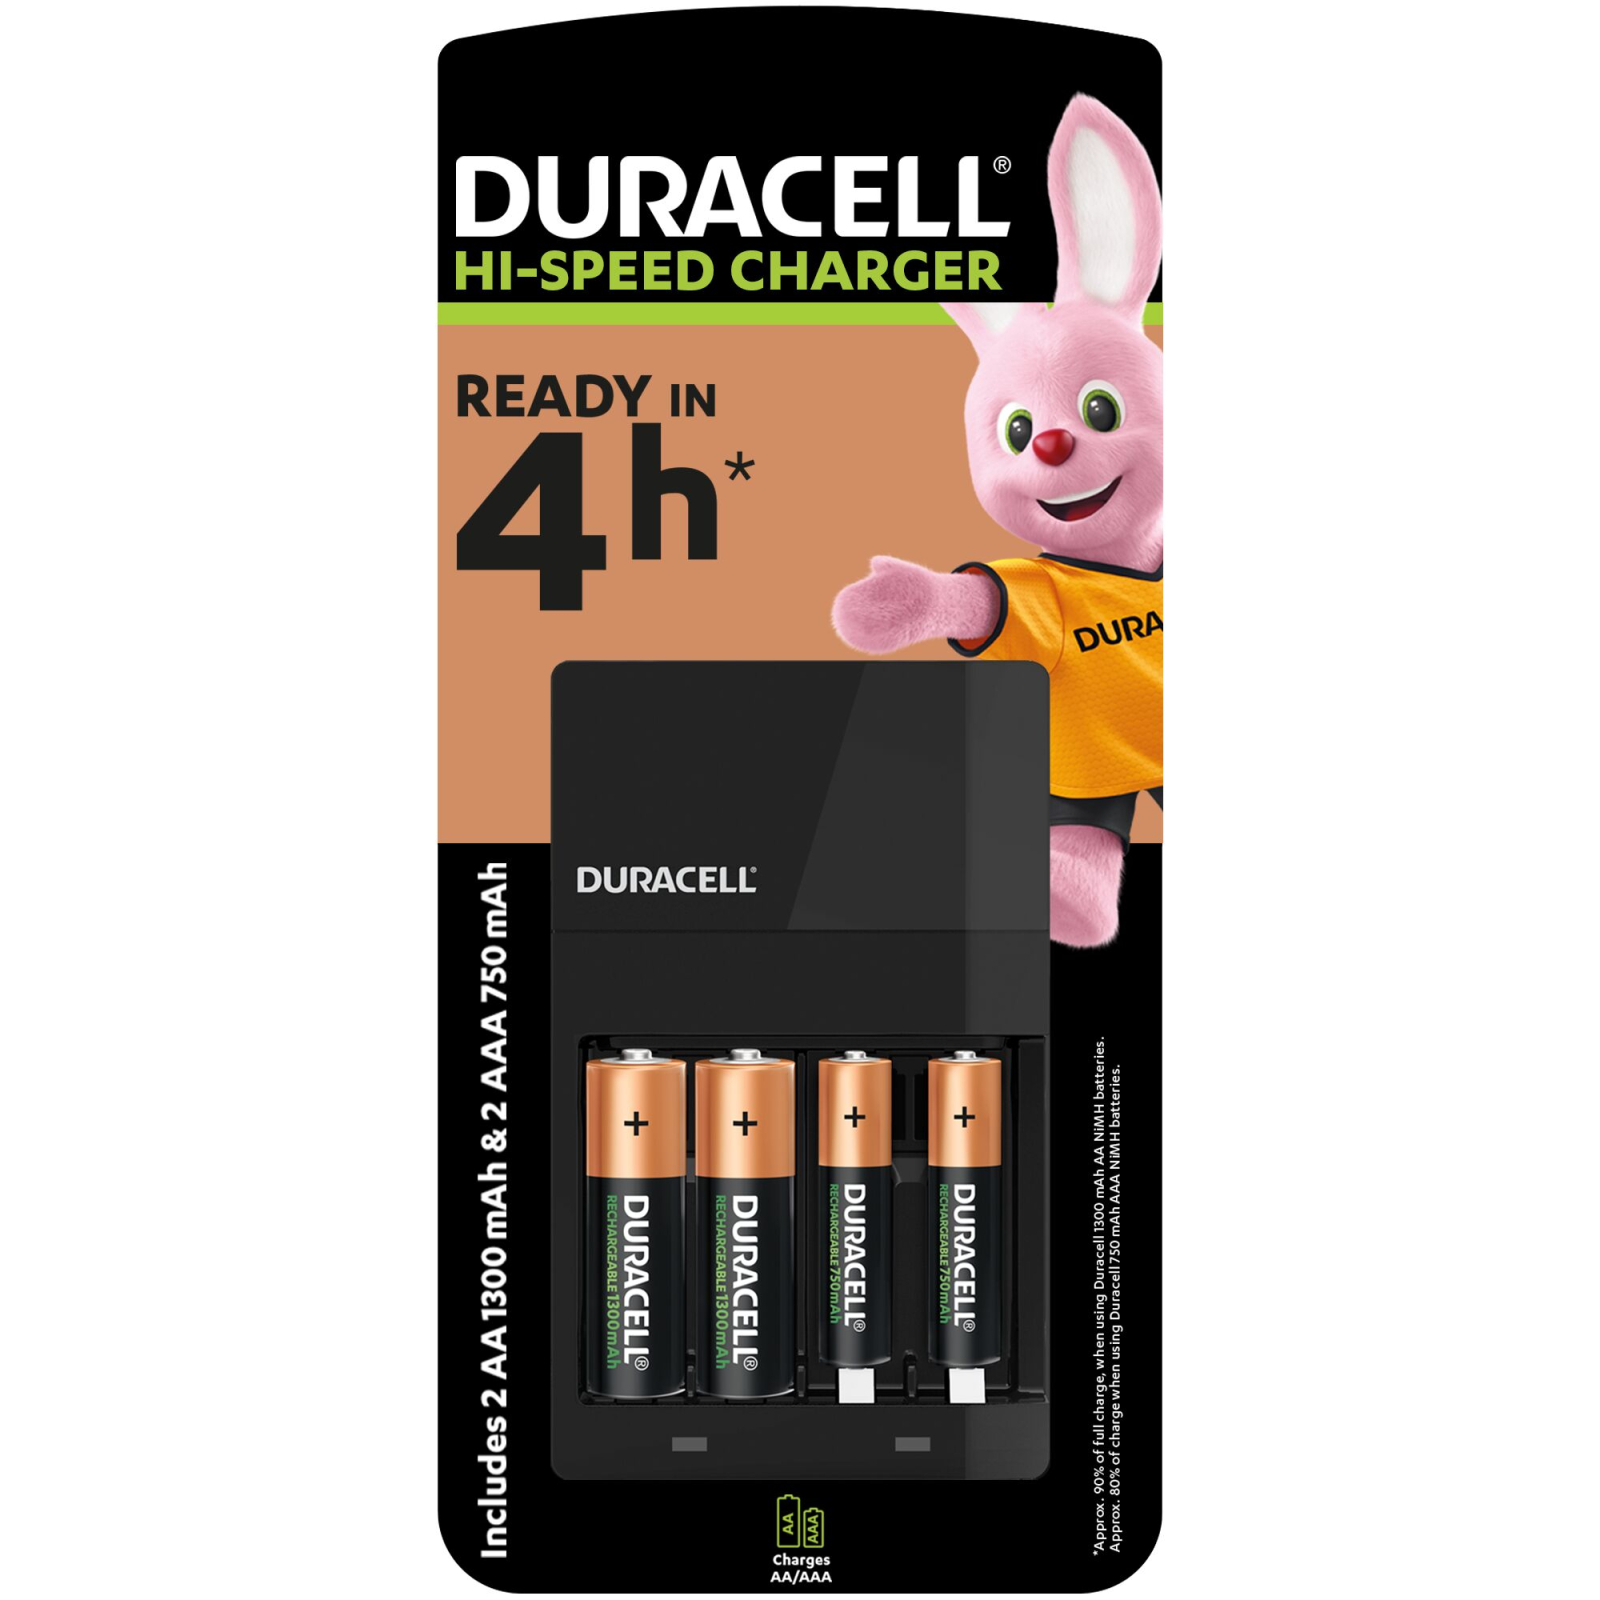 Зарядное устройство для аккумуляторов Duracell CEF14, 4 часа, 1 шт. (Includes 2 AA1300mAh & 2 AAA750mAh) (5007497 / 5004990)